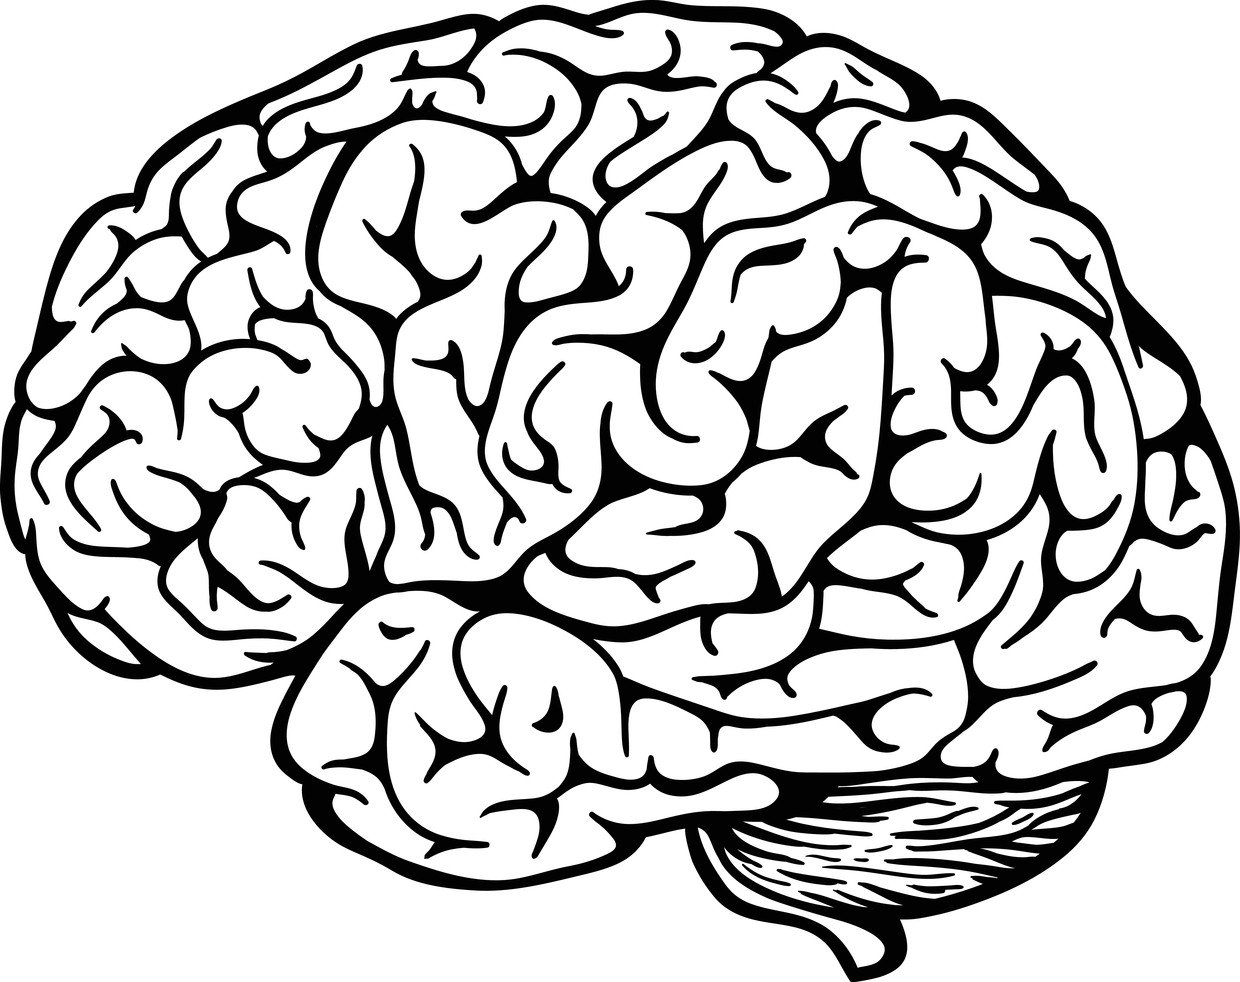 Brain pdf. Мозг очертания. Мозг черно белый. Мозг контур.